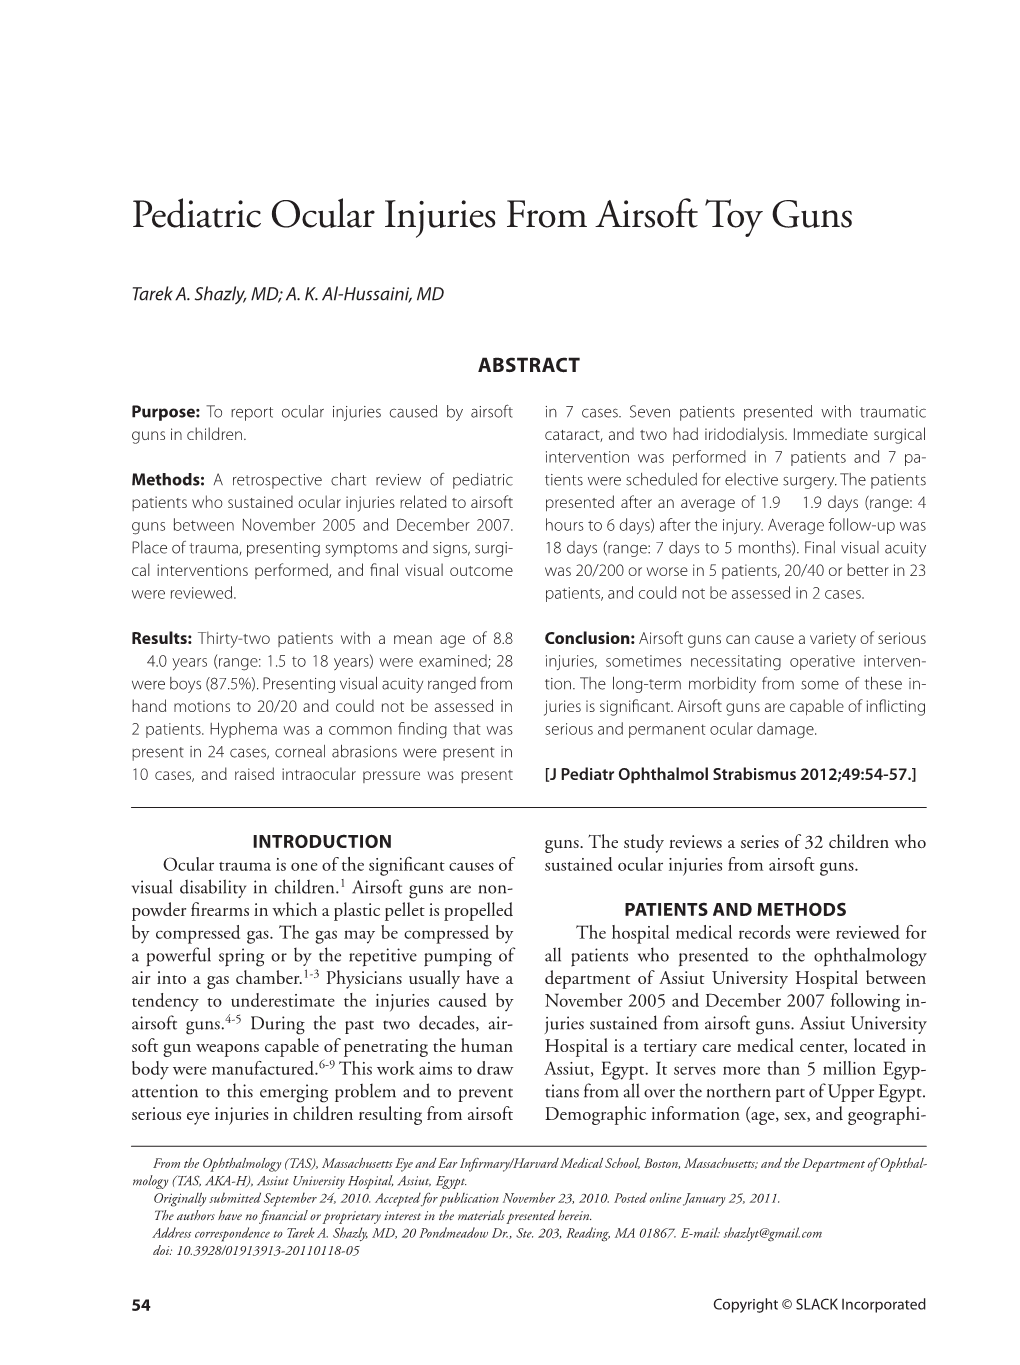 Pediatric Ocular Injuries from Airsoft Toy Guns